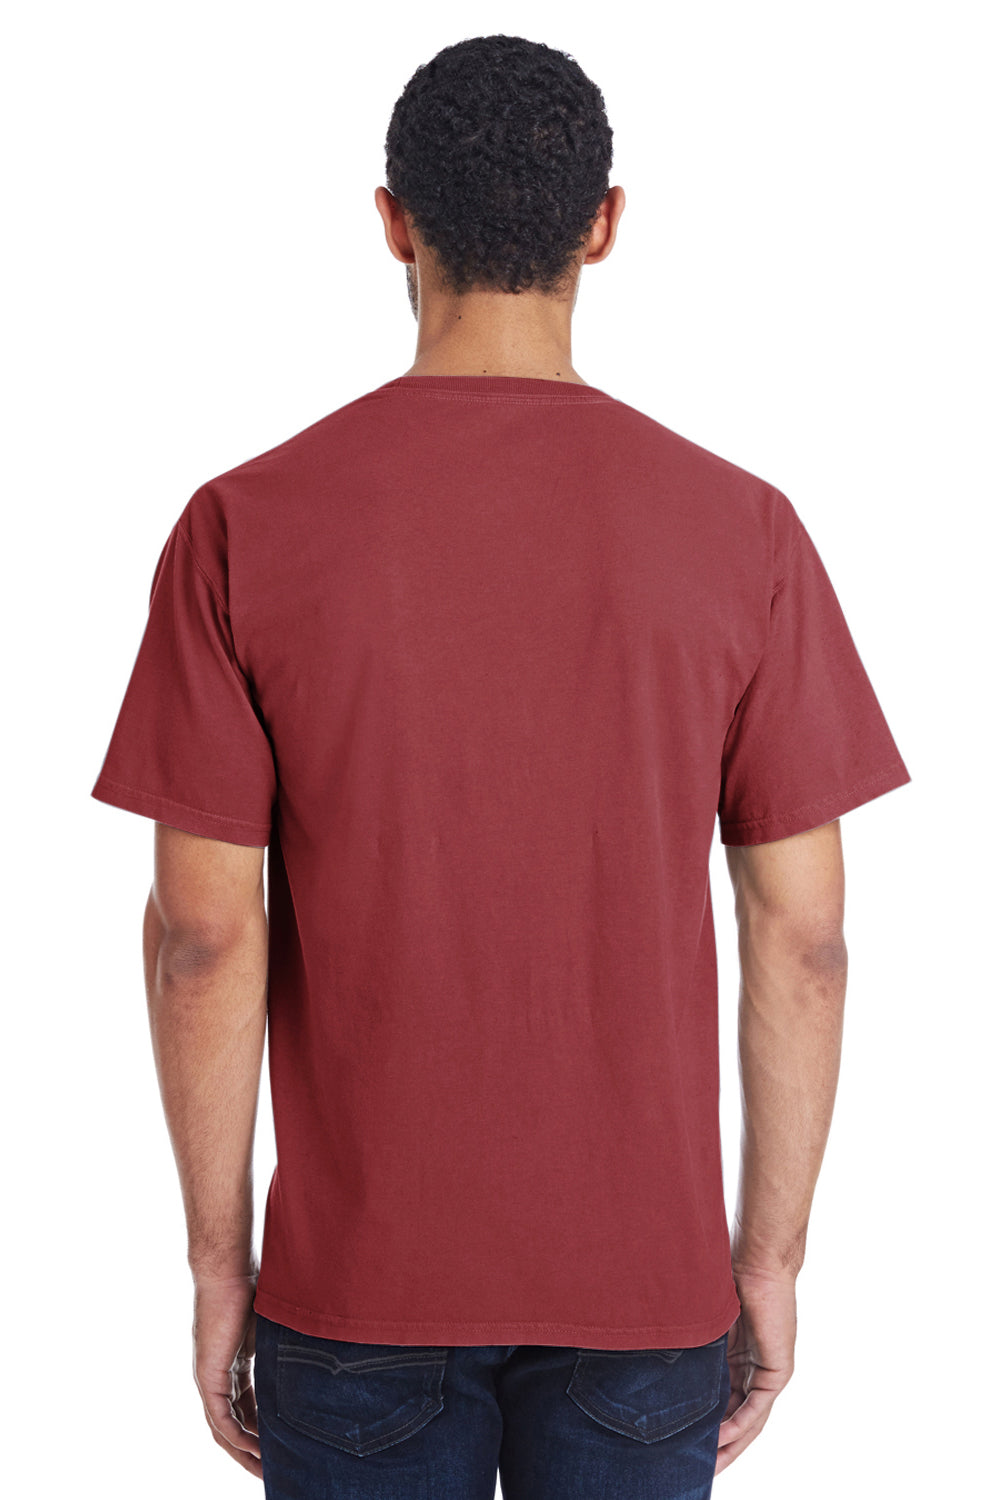 ComfortWash by Hanes GDH100 Short Sleeve Crewneck T-Shirt Cayenne Red Back